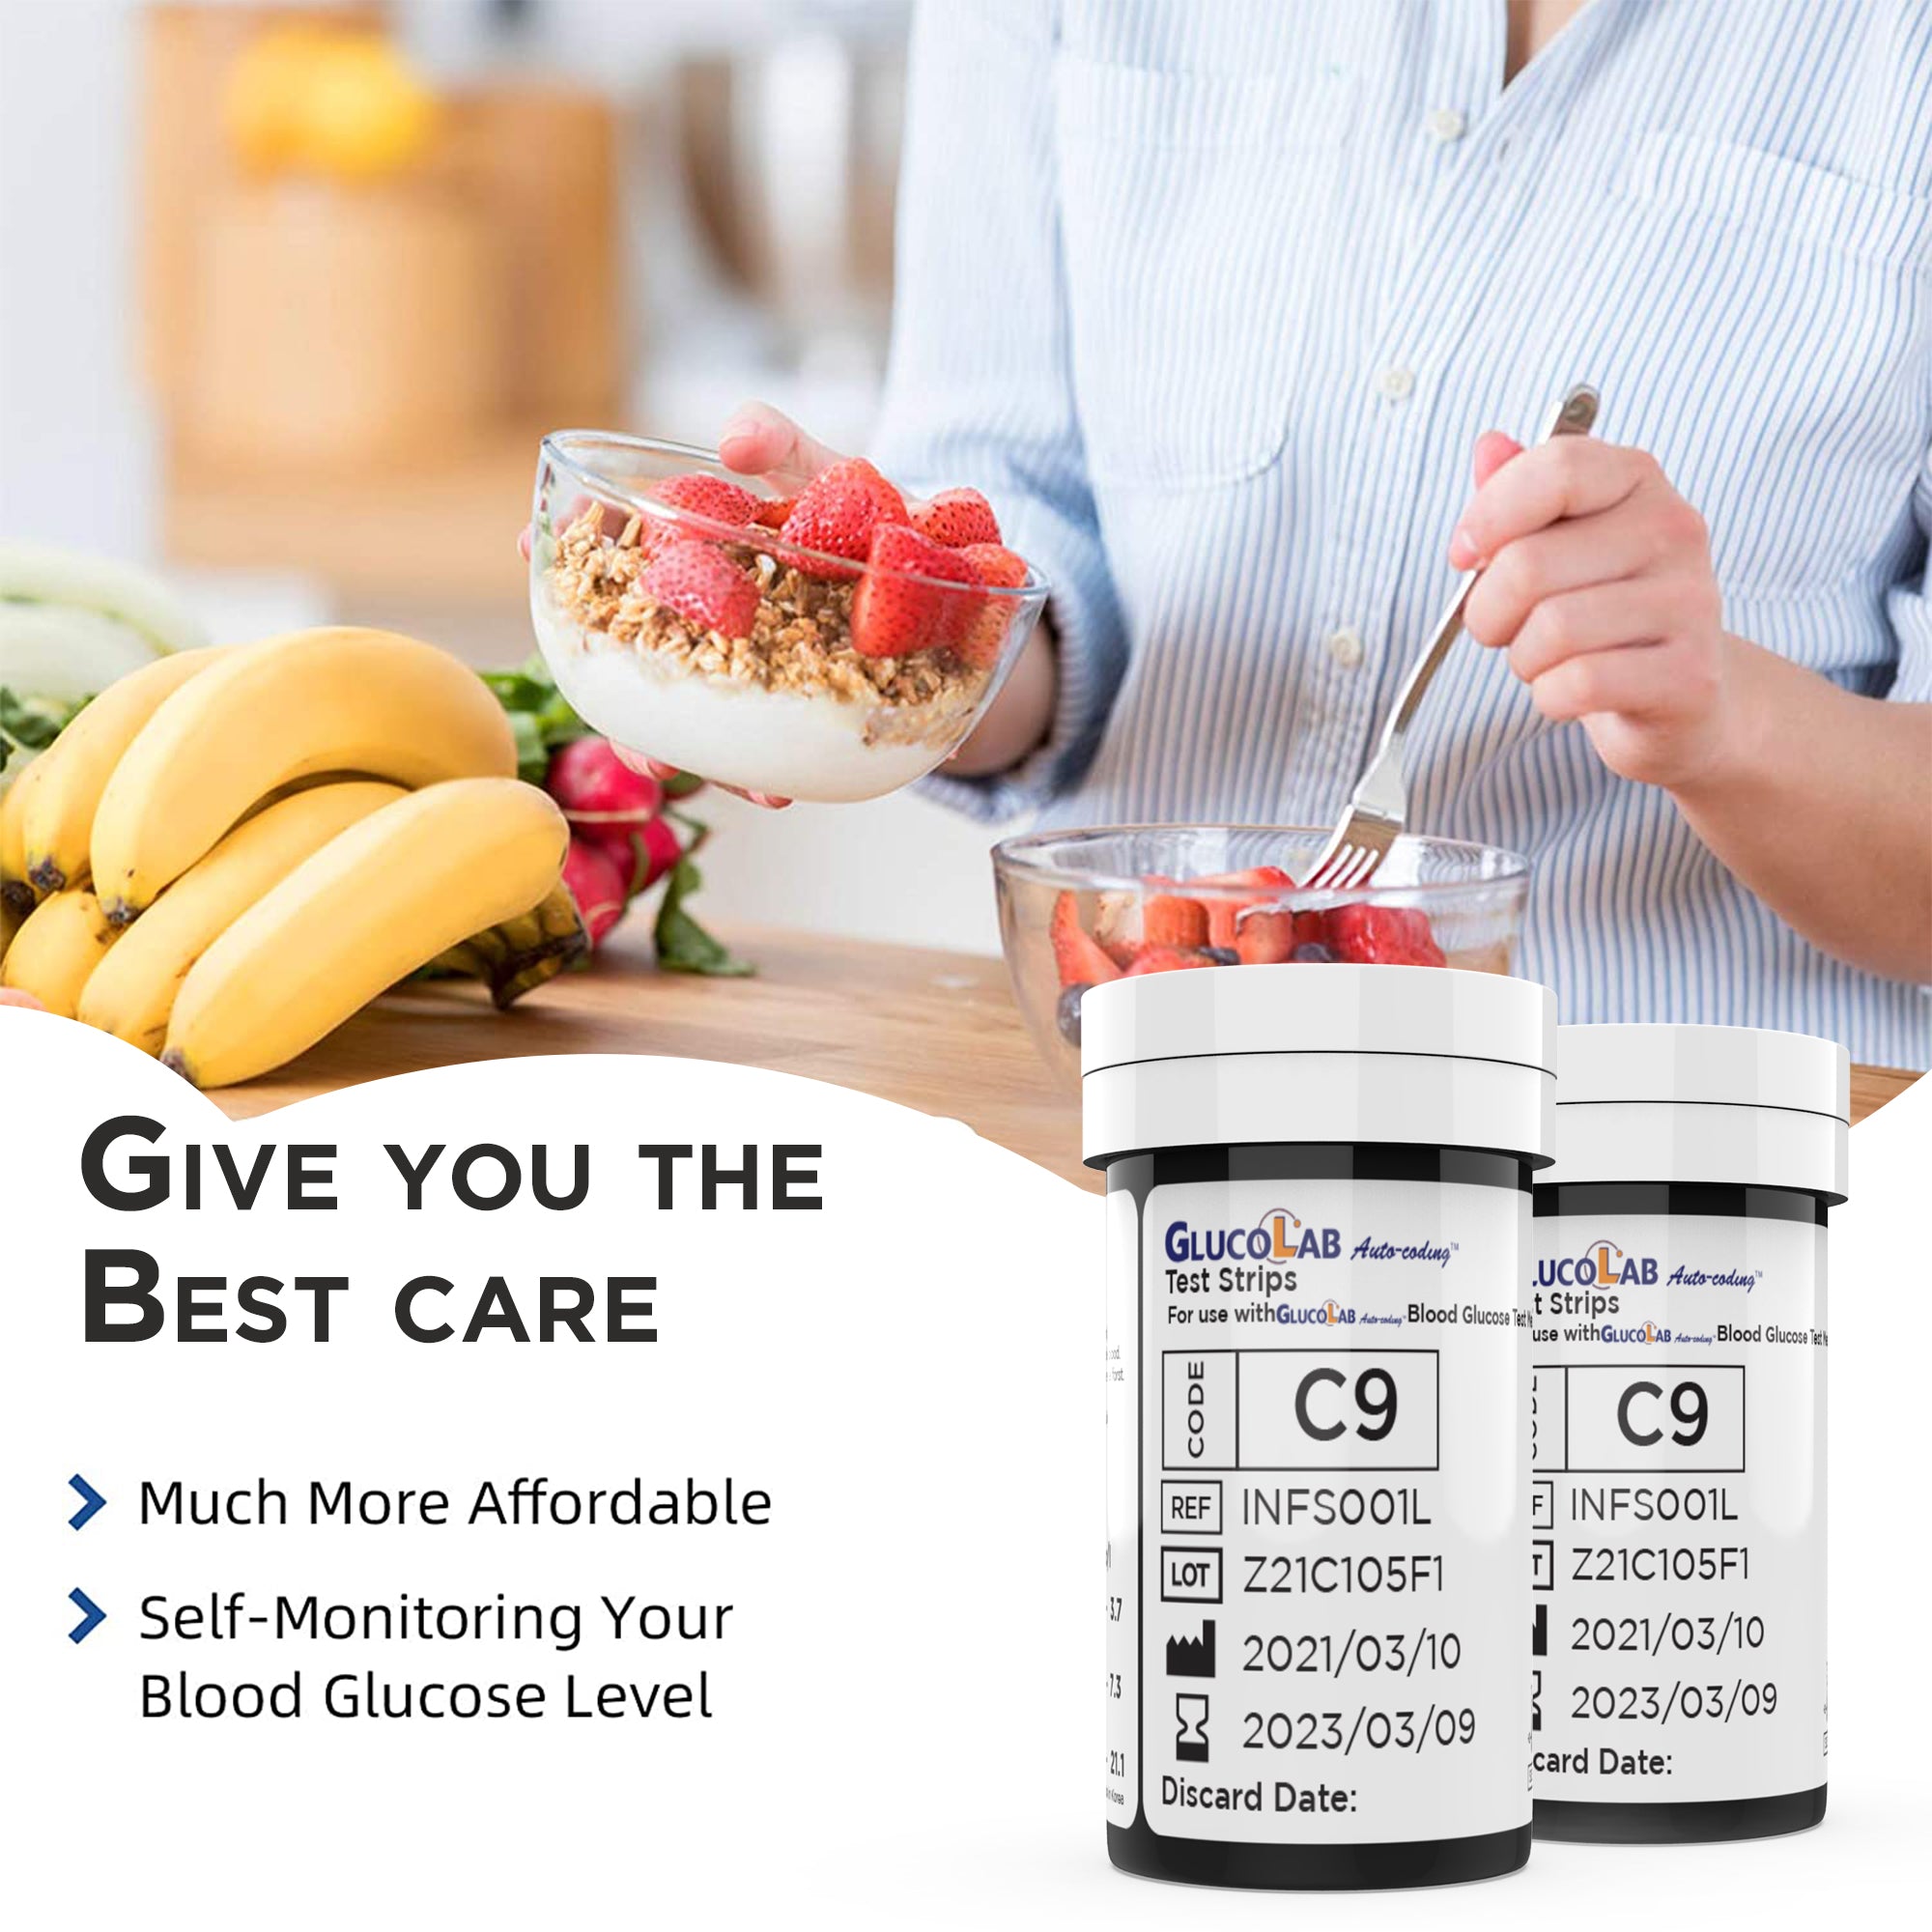 K-Life Glucolab blood Glucose Sugar Testing 50 Strips, Black